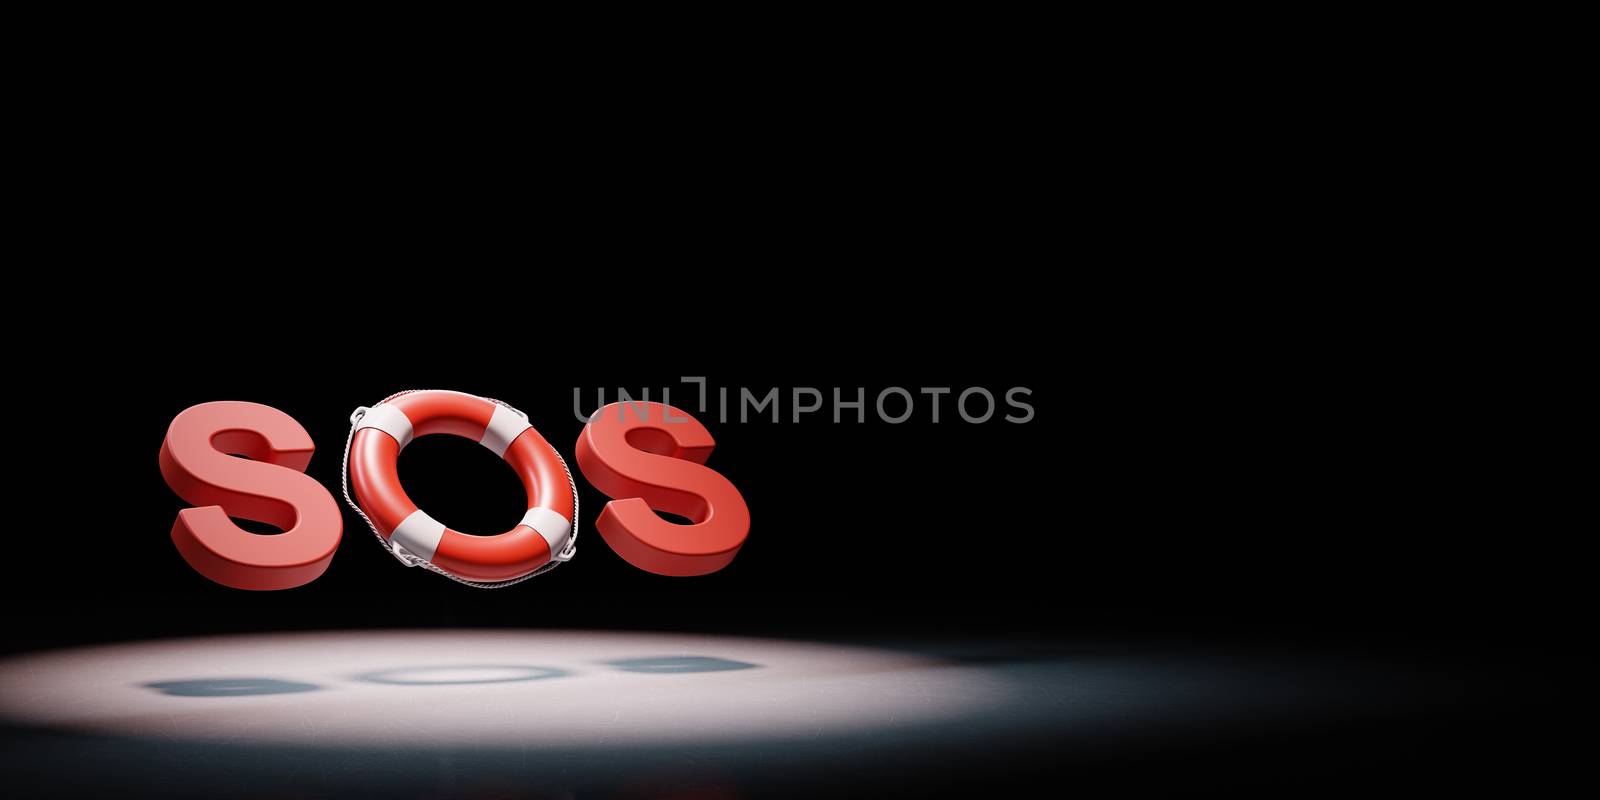 SOS Text Lifebelt Spotlighted on Black Background 3D Illustration by make